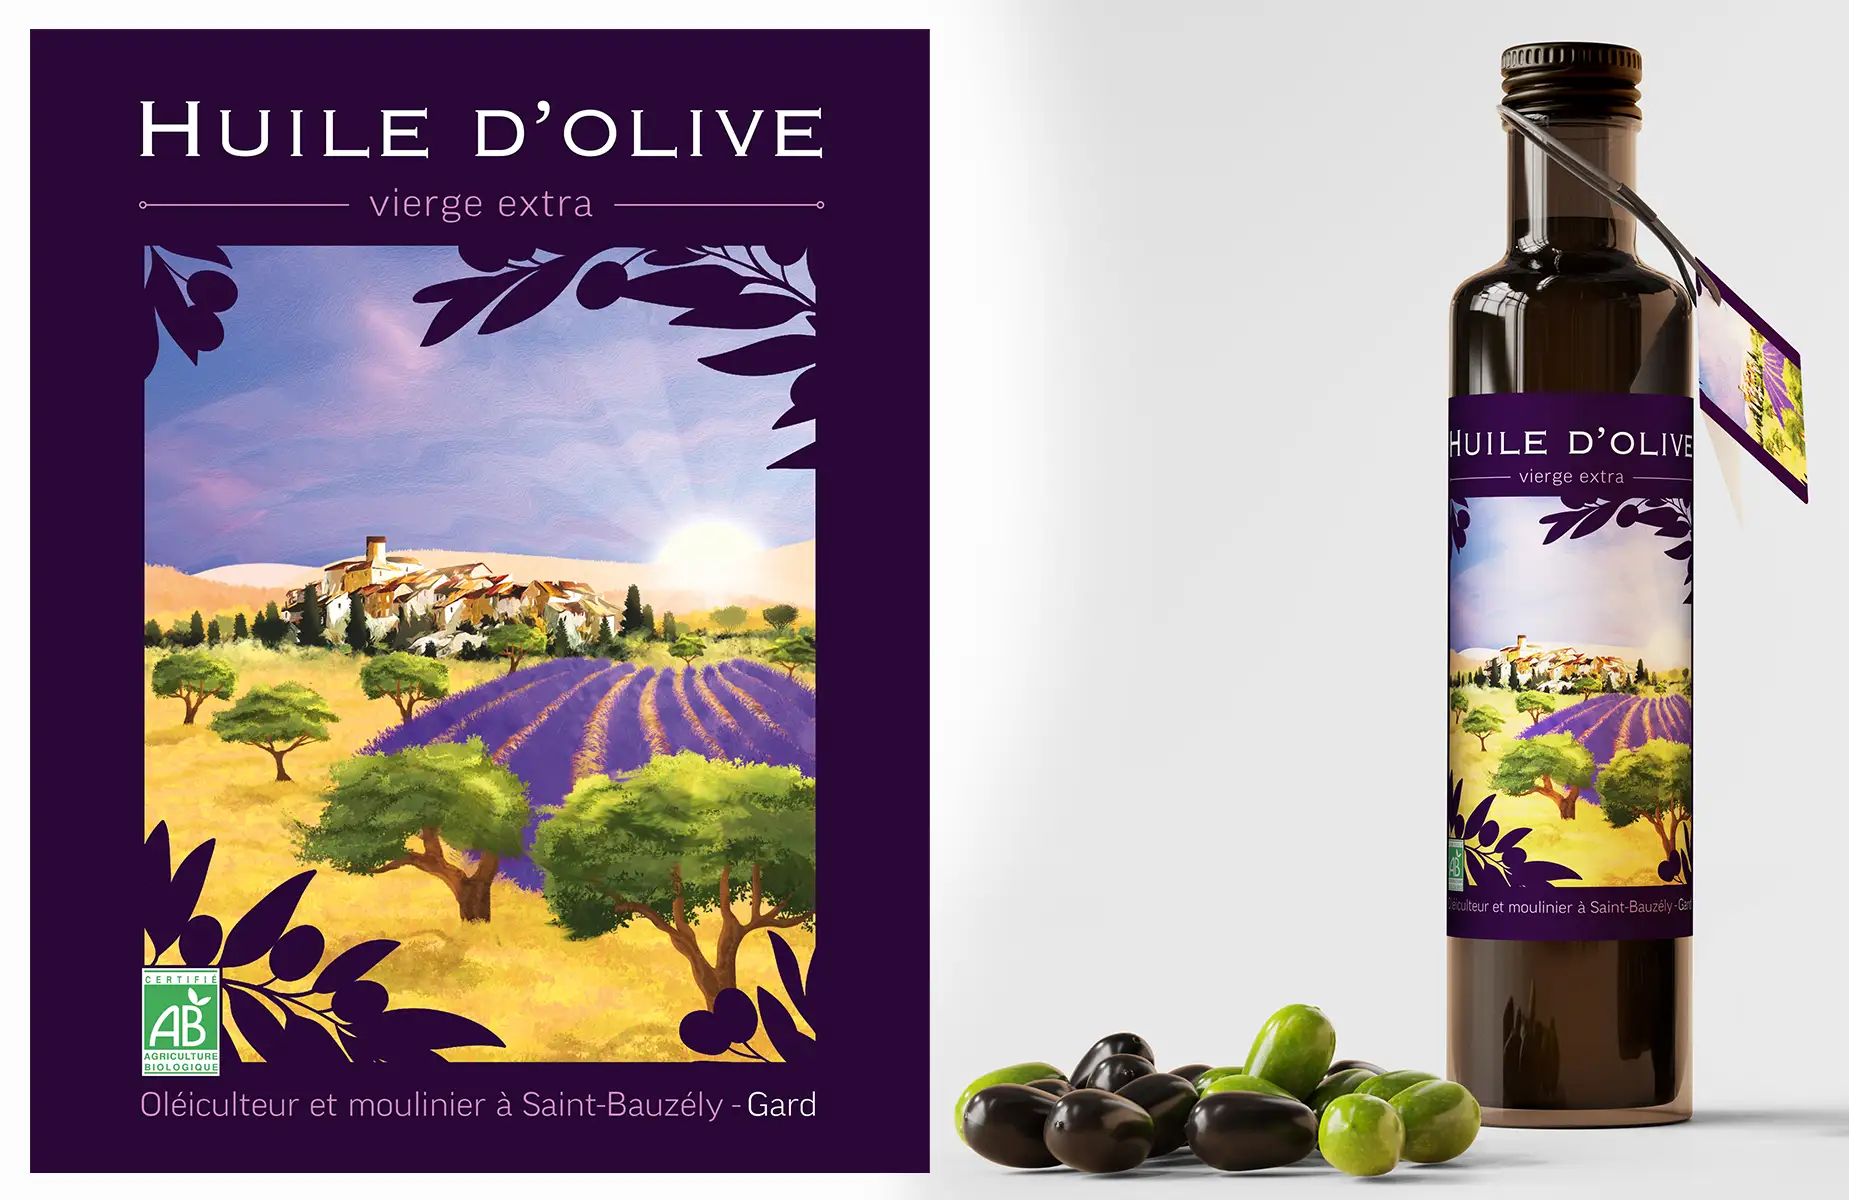 Illustration etiquette huile d'olive